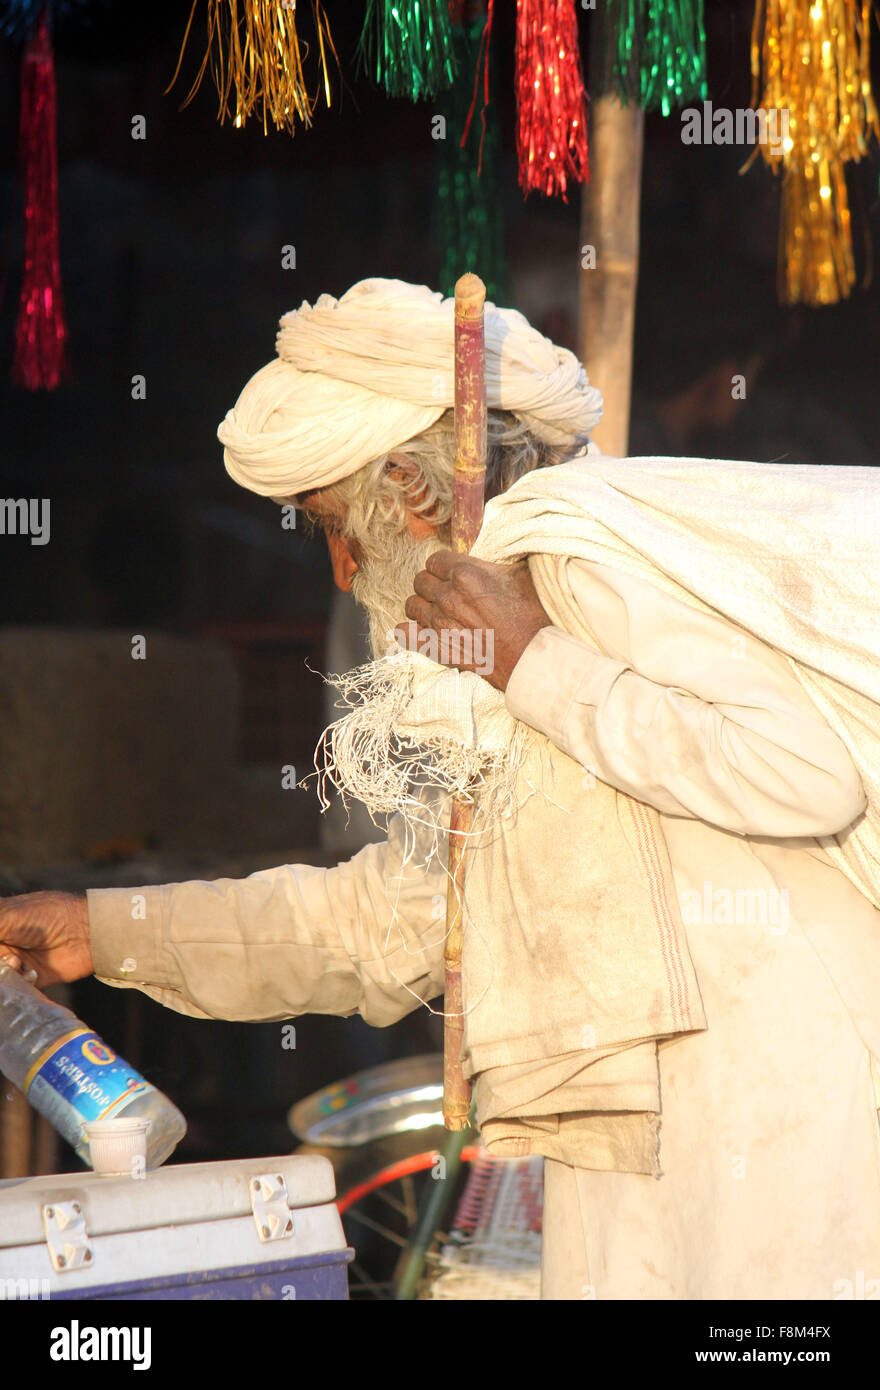 PUSHKAR, INDIA - NOV 28 2014: Indian senior man, white dressed, walking with a cane and a big sack on his shoulder, at Pushkar F Stock Photo